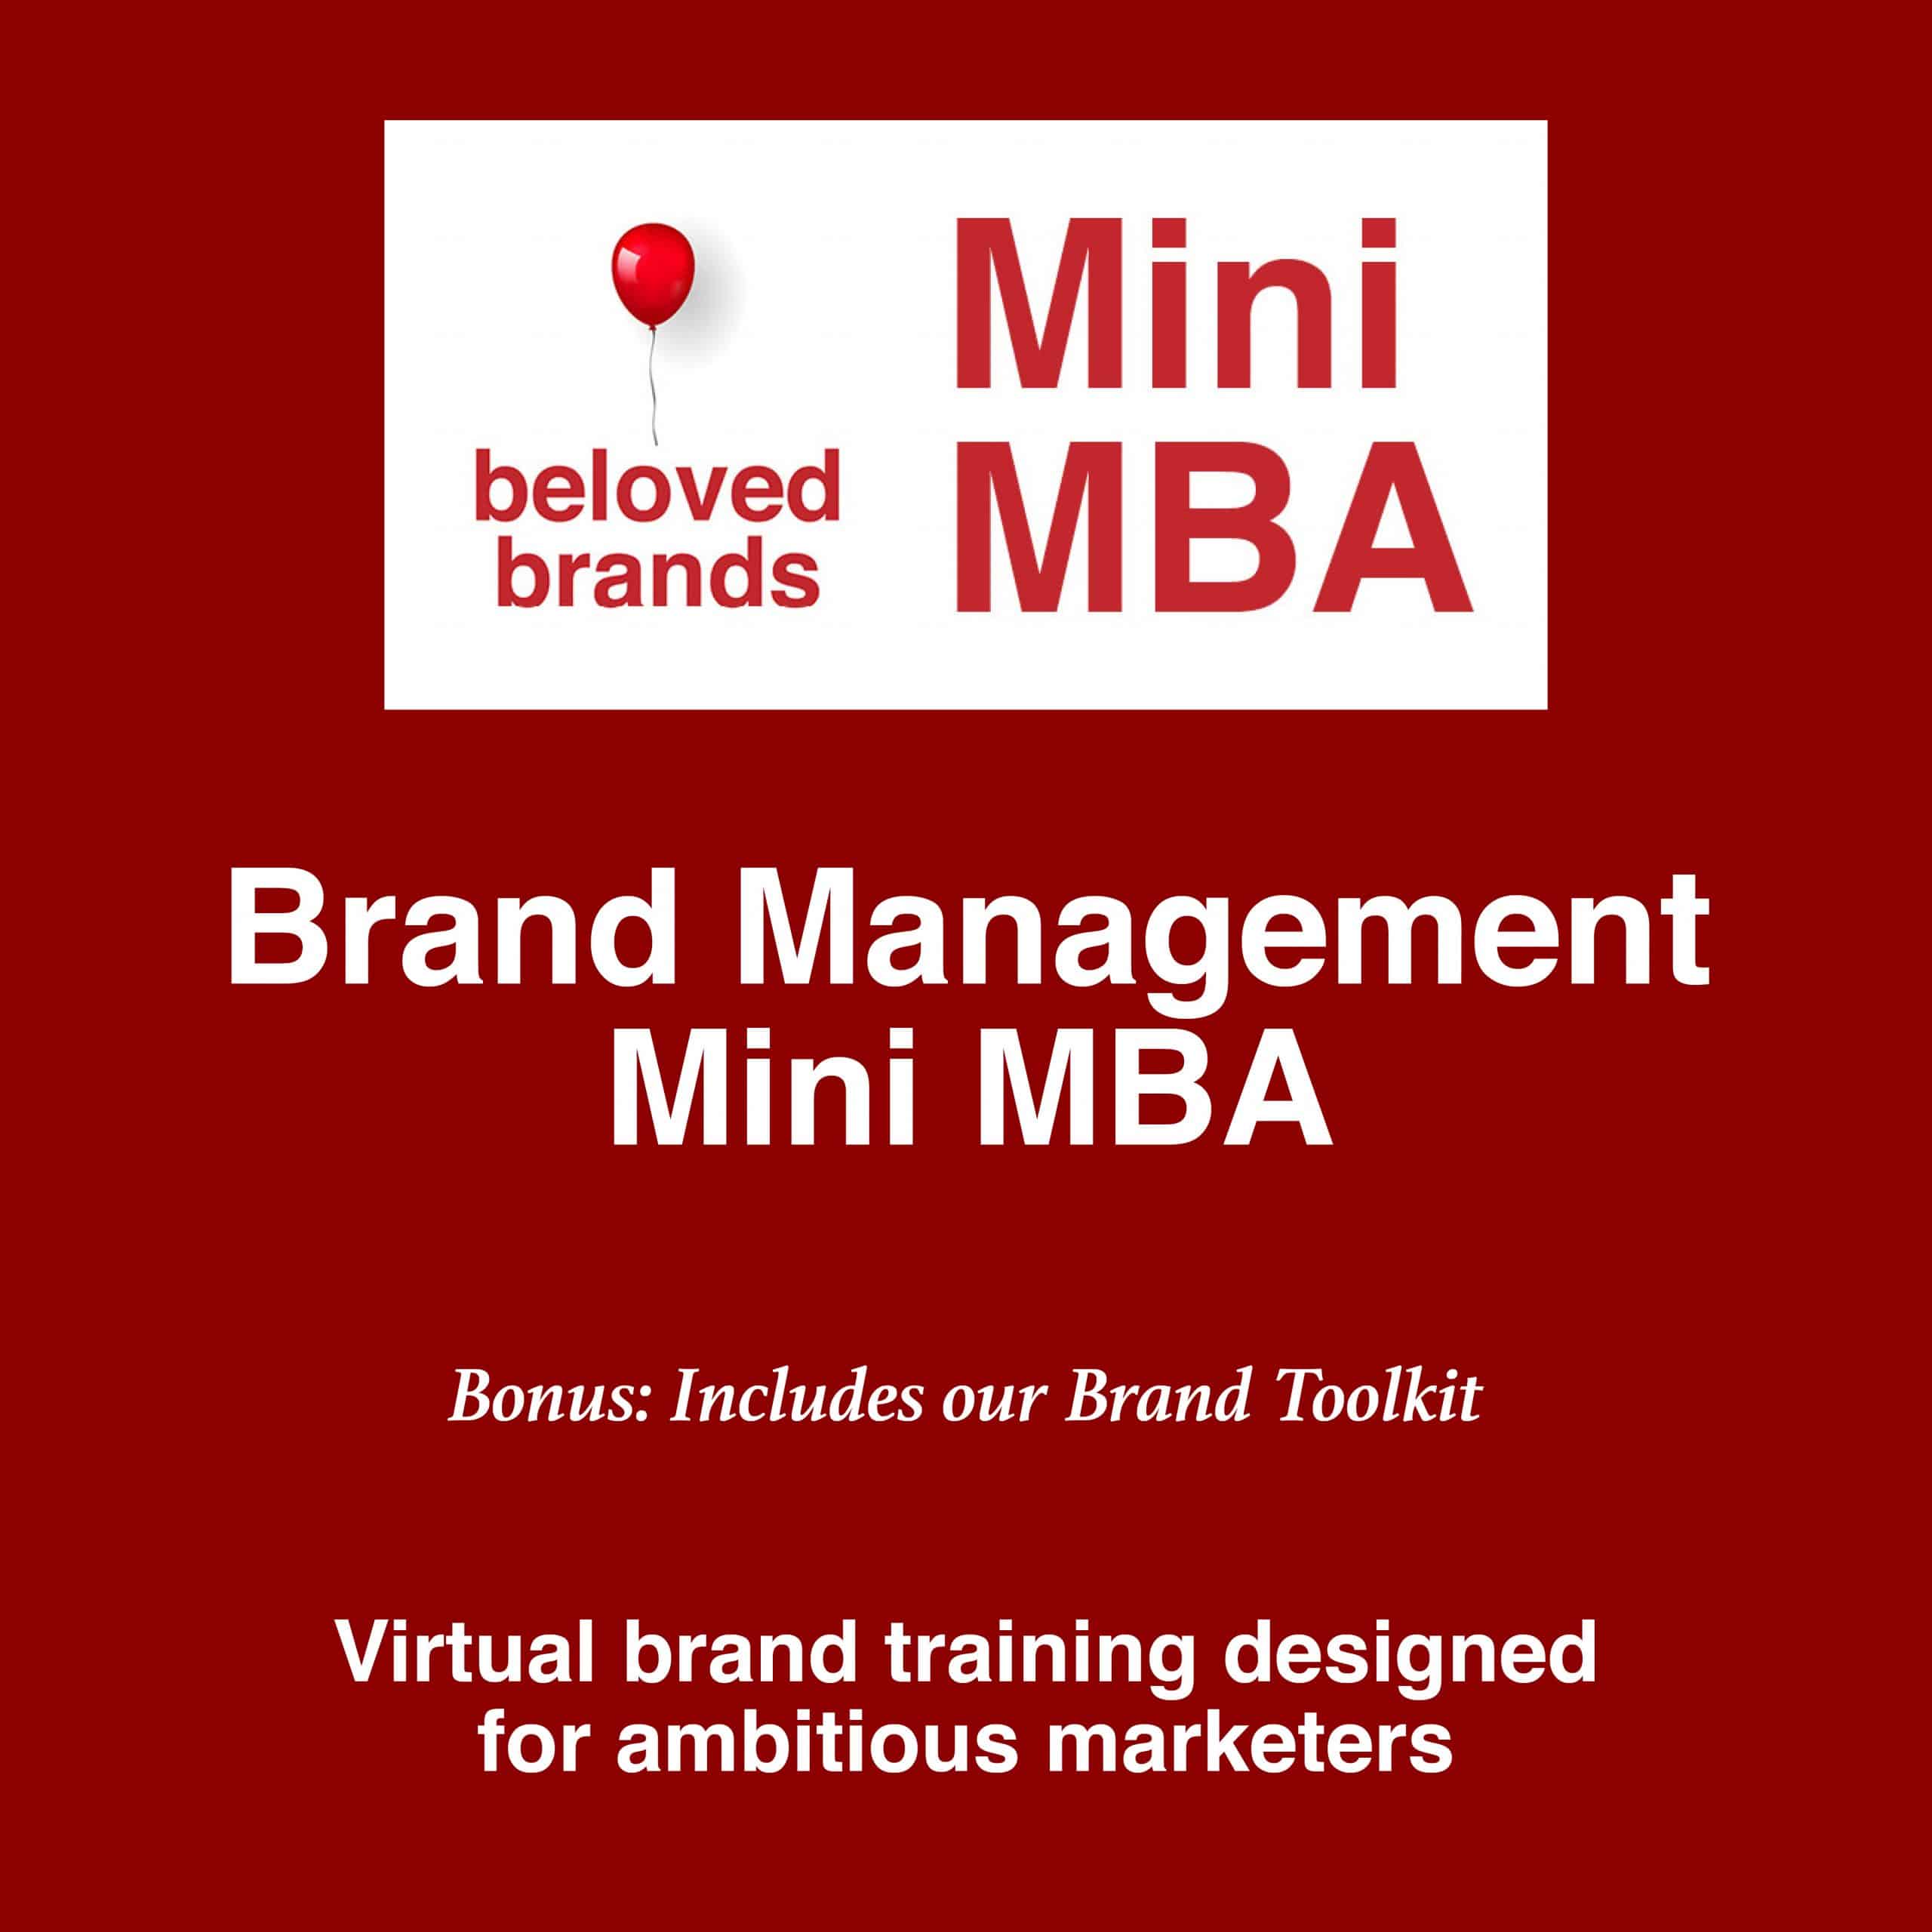 Brand Management Mini MBA Certificate